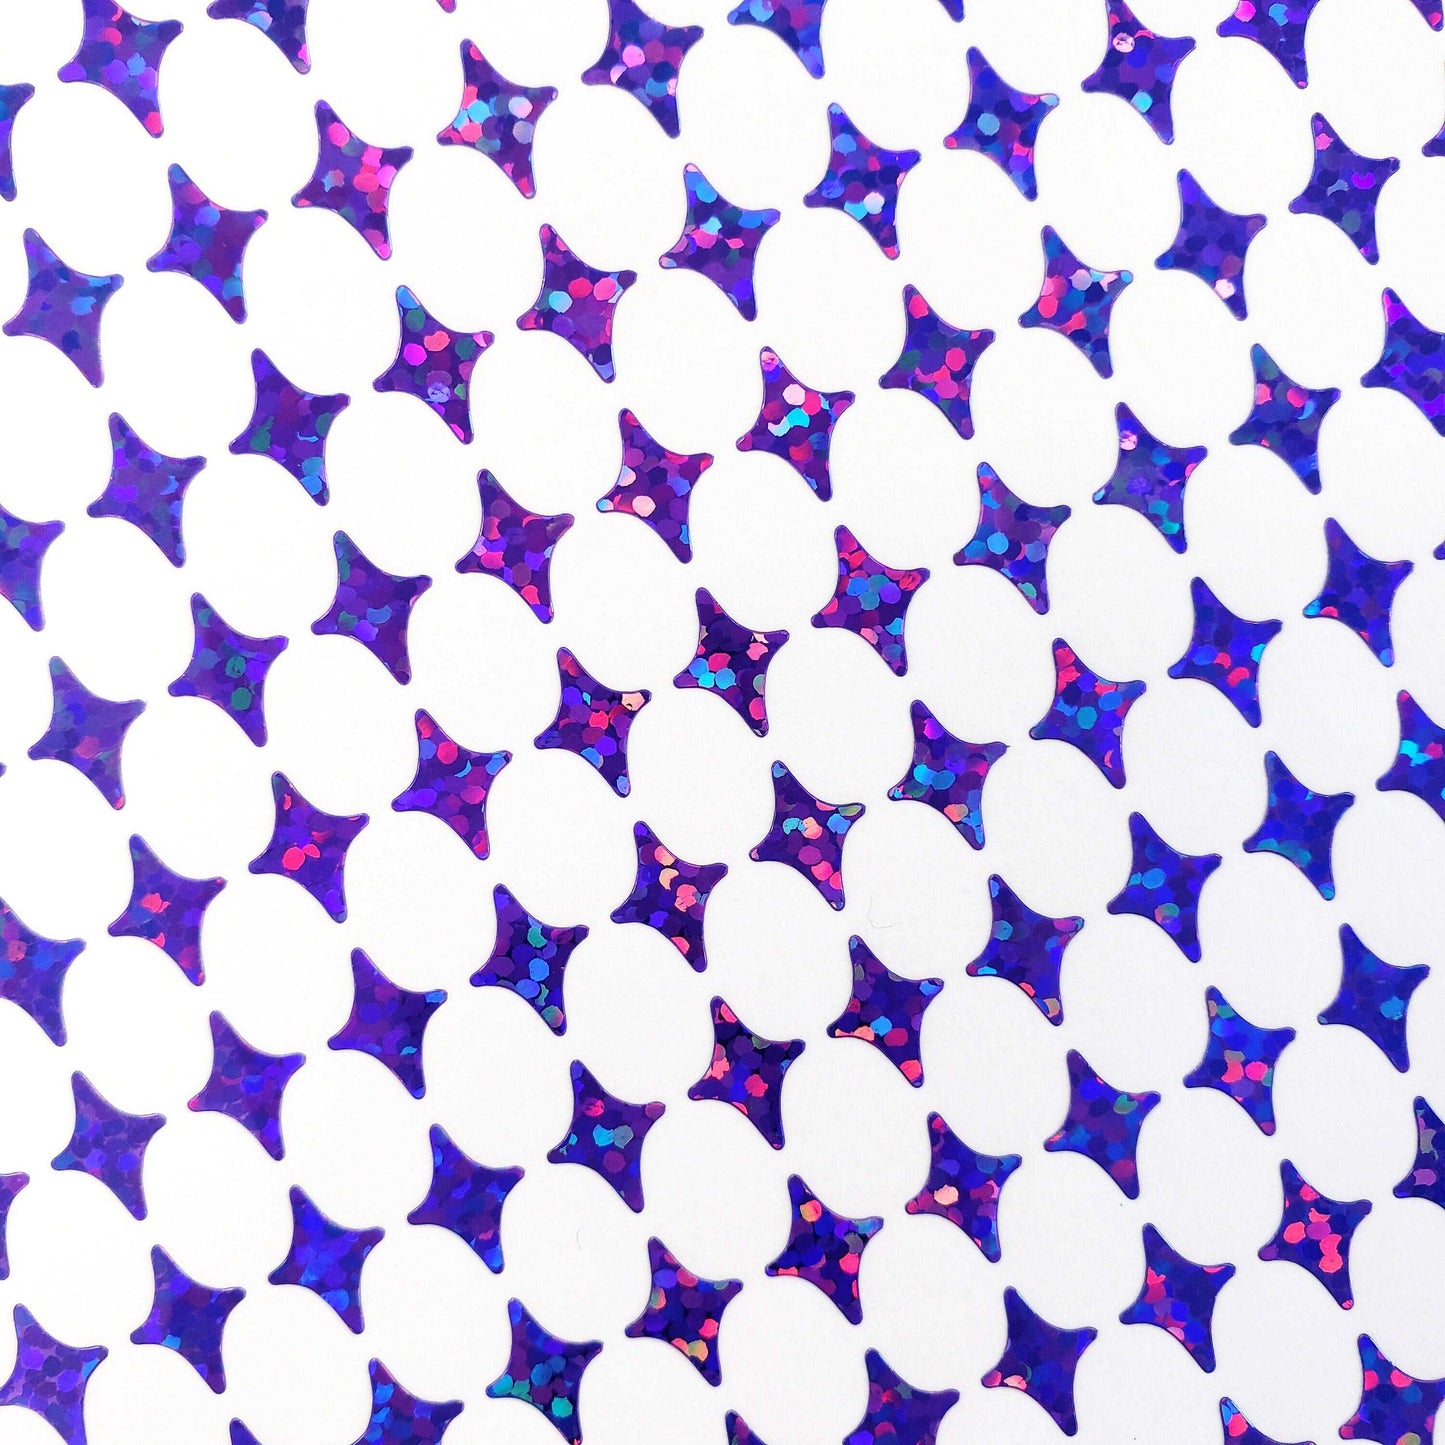 Purple Four-Pointed Stars Sticker Sheet.